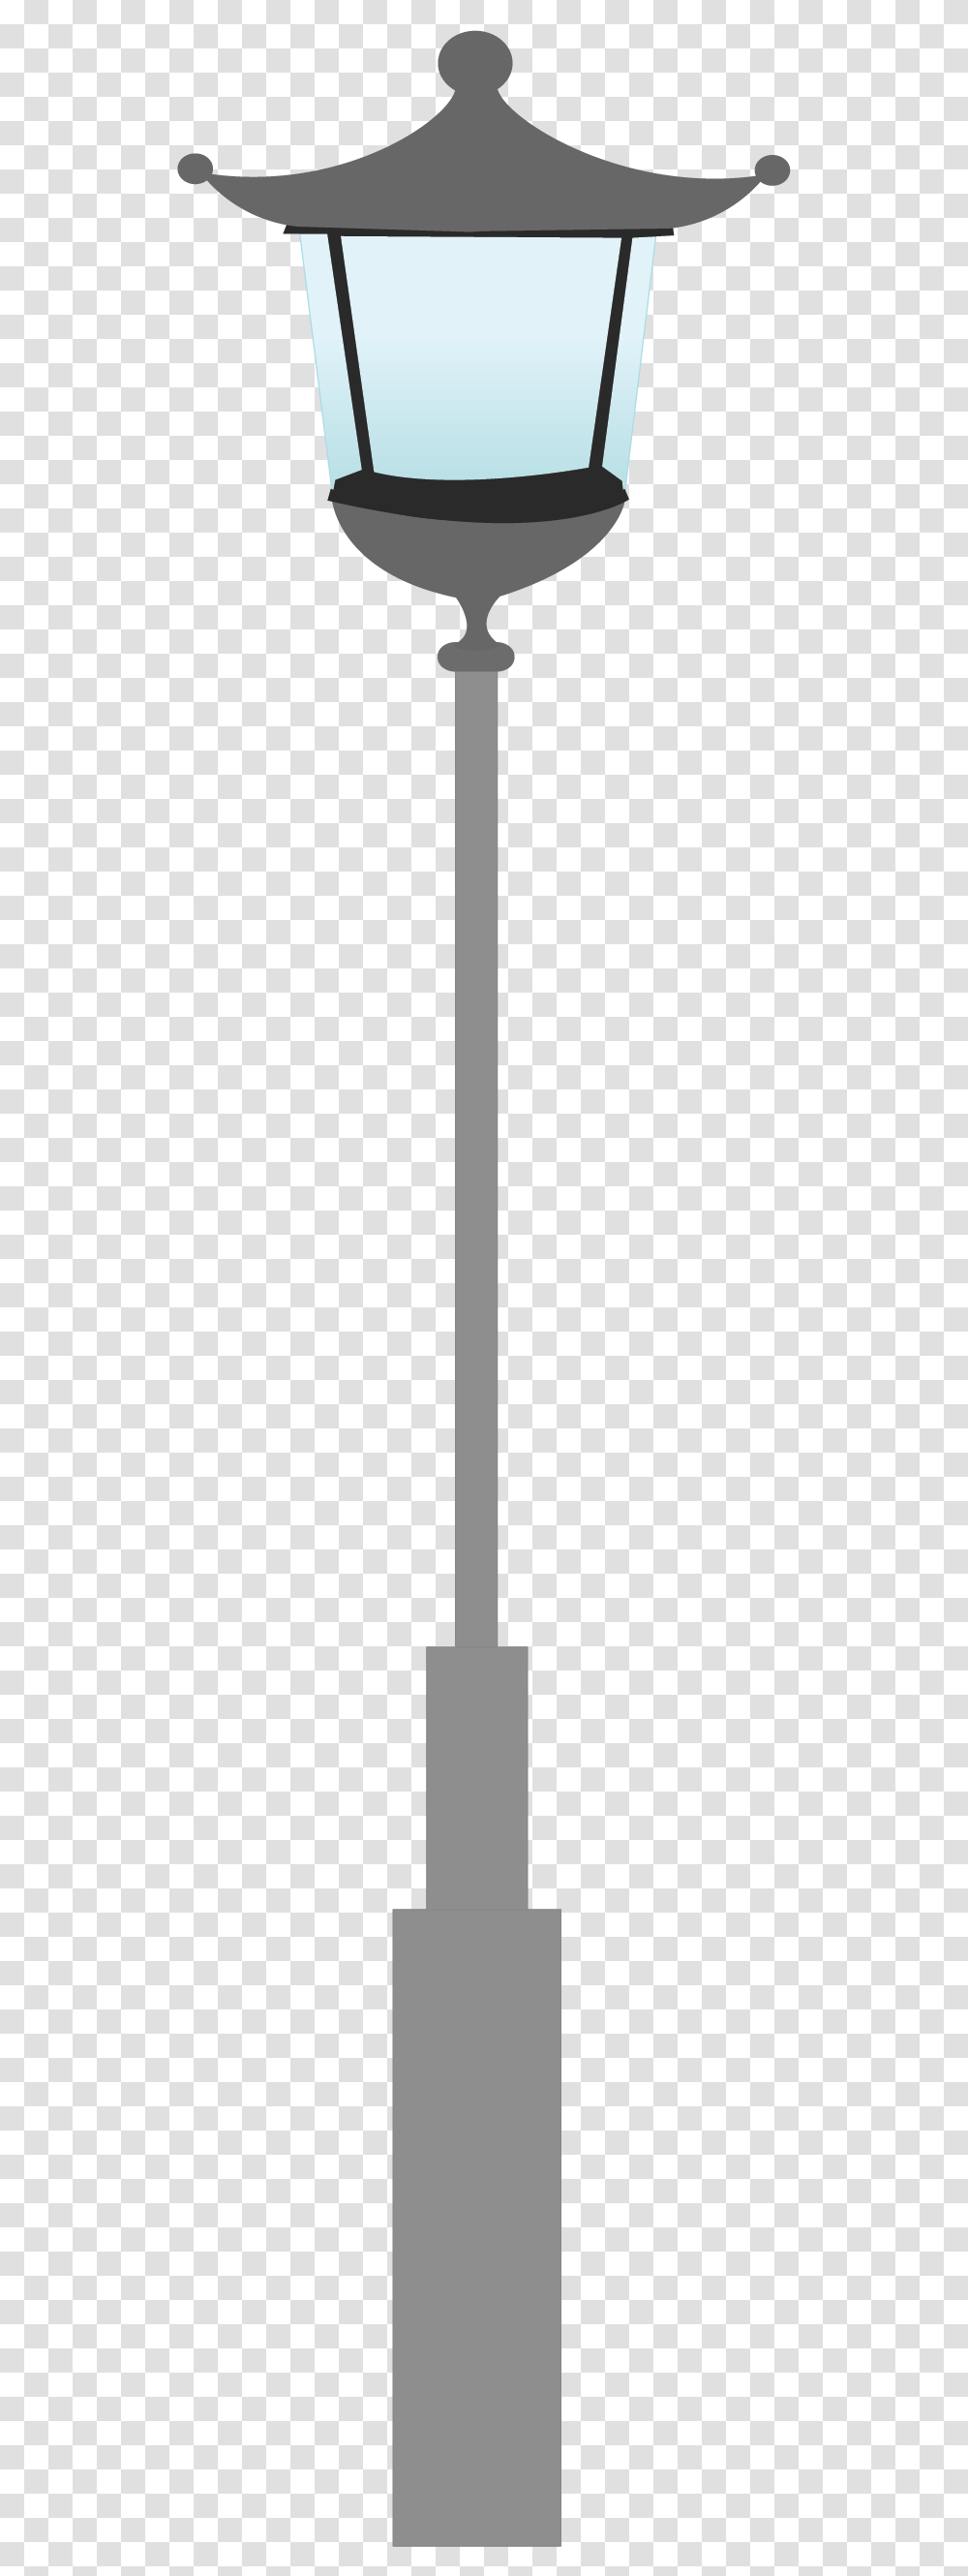 Street Light, Sword, Weapon, Lamp Post Transparent Png